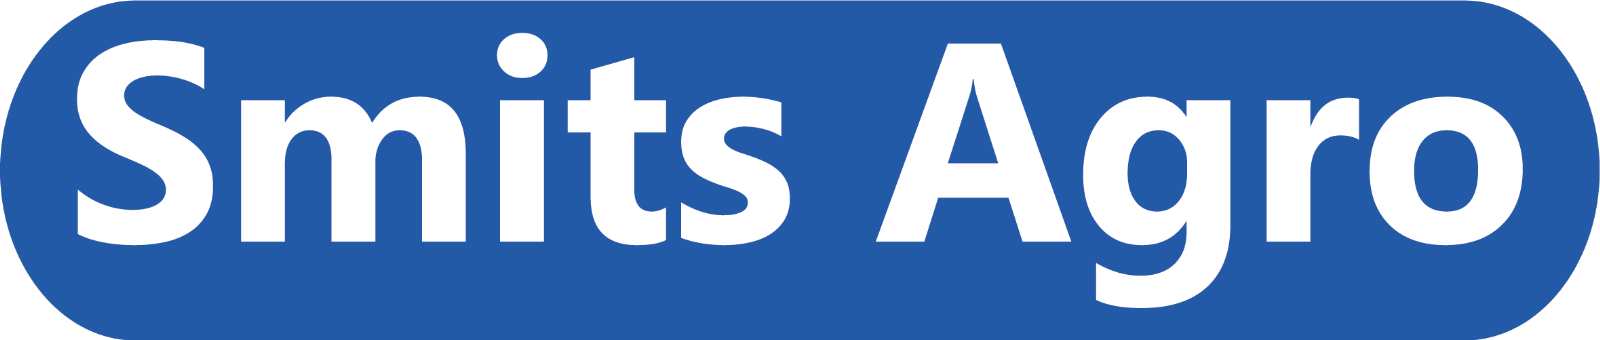 Smits Agro logo